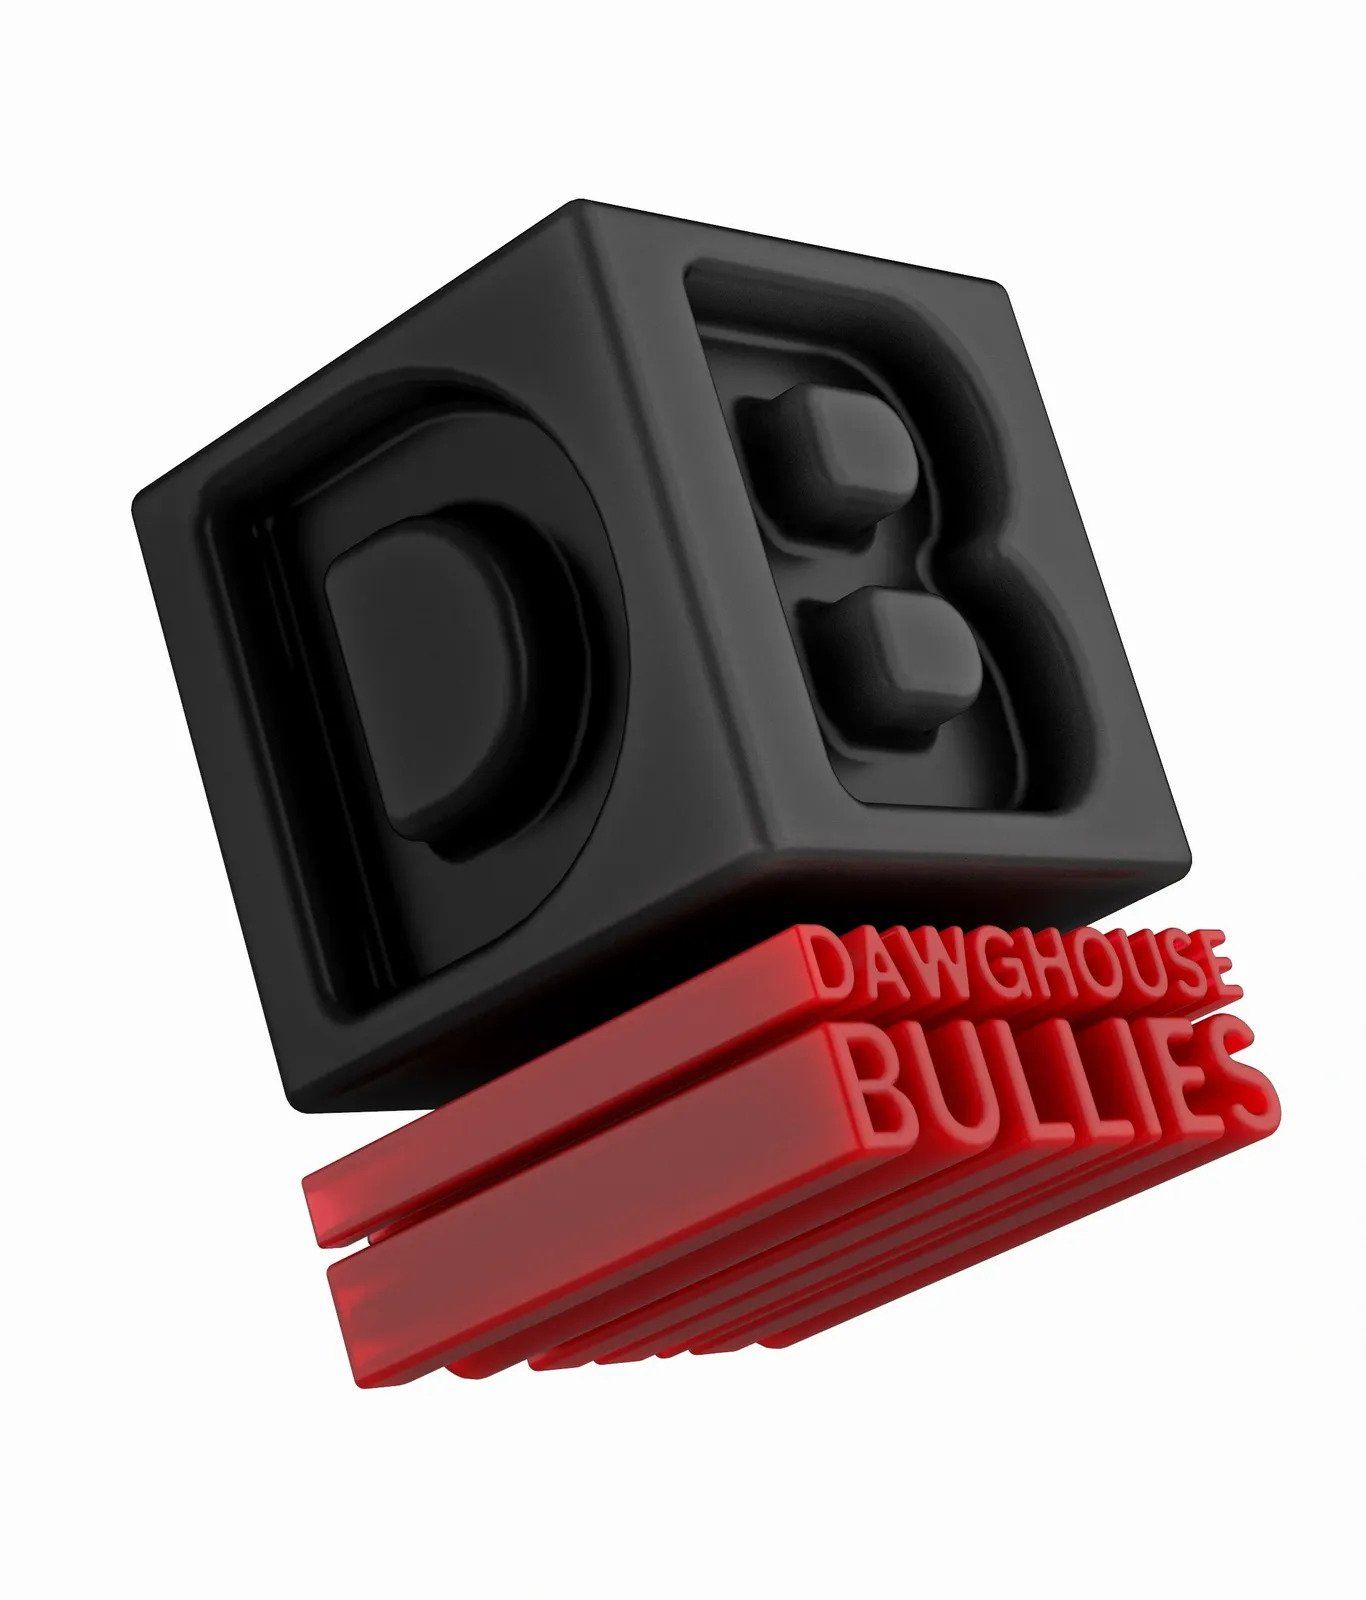 Dawghouse Bullies logo